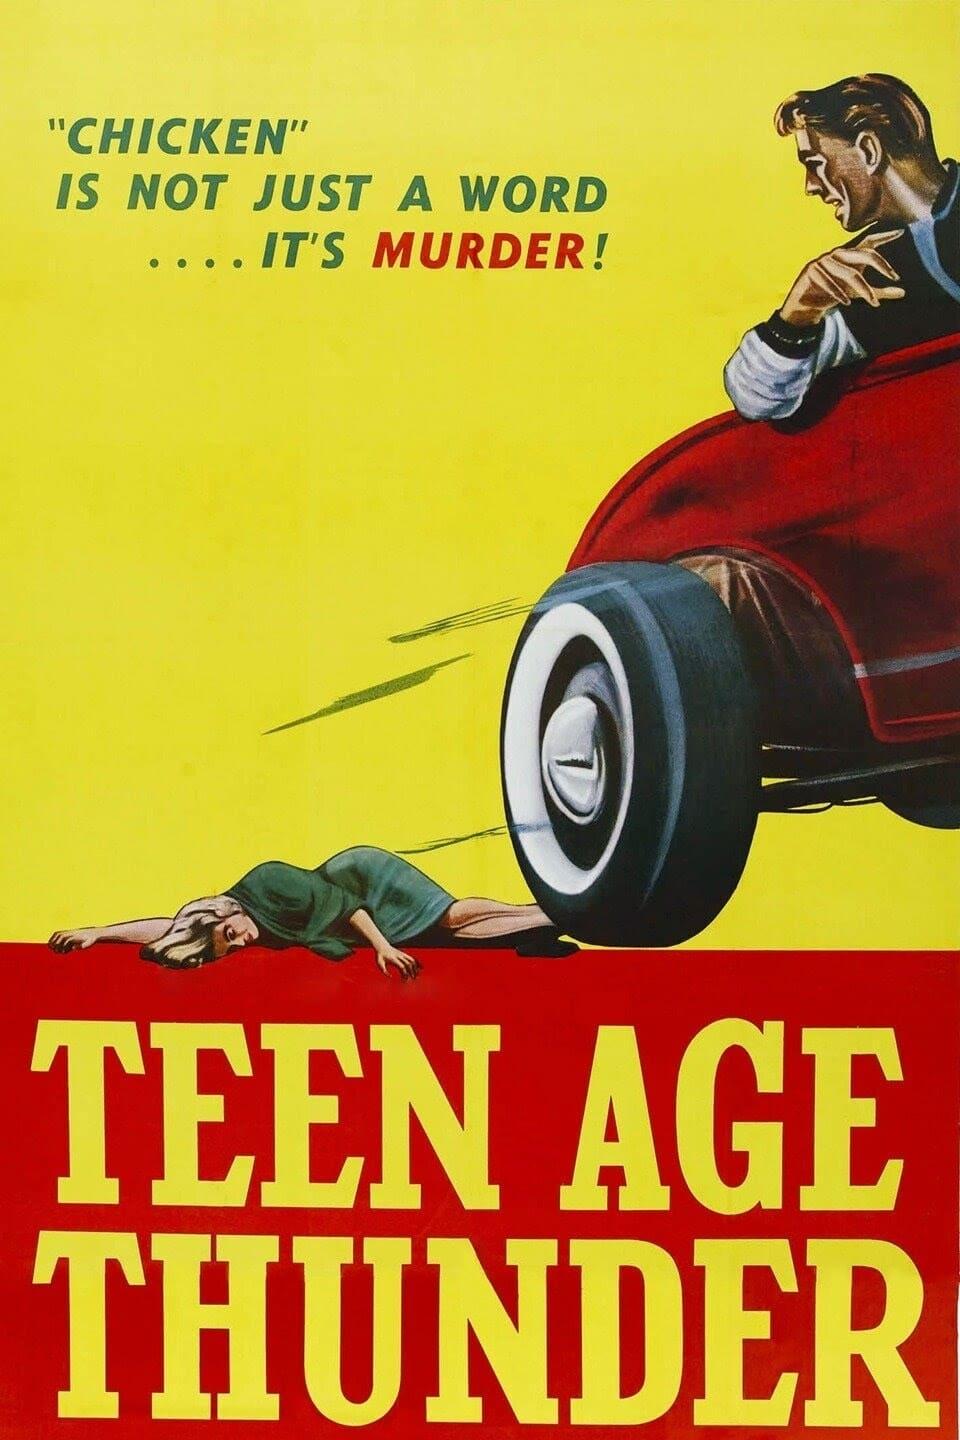 Teenage Thunder poster